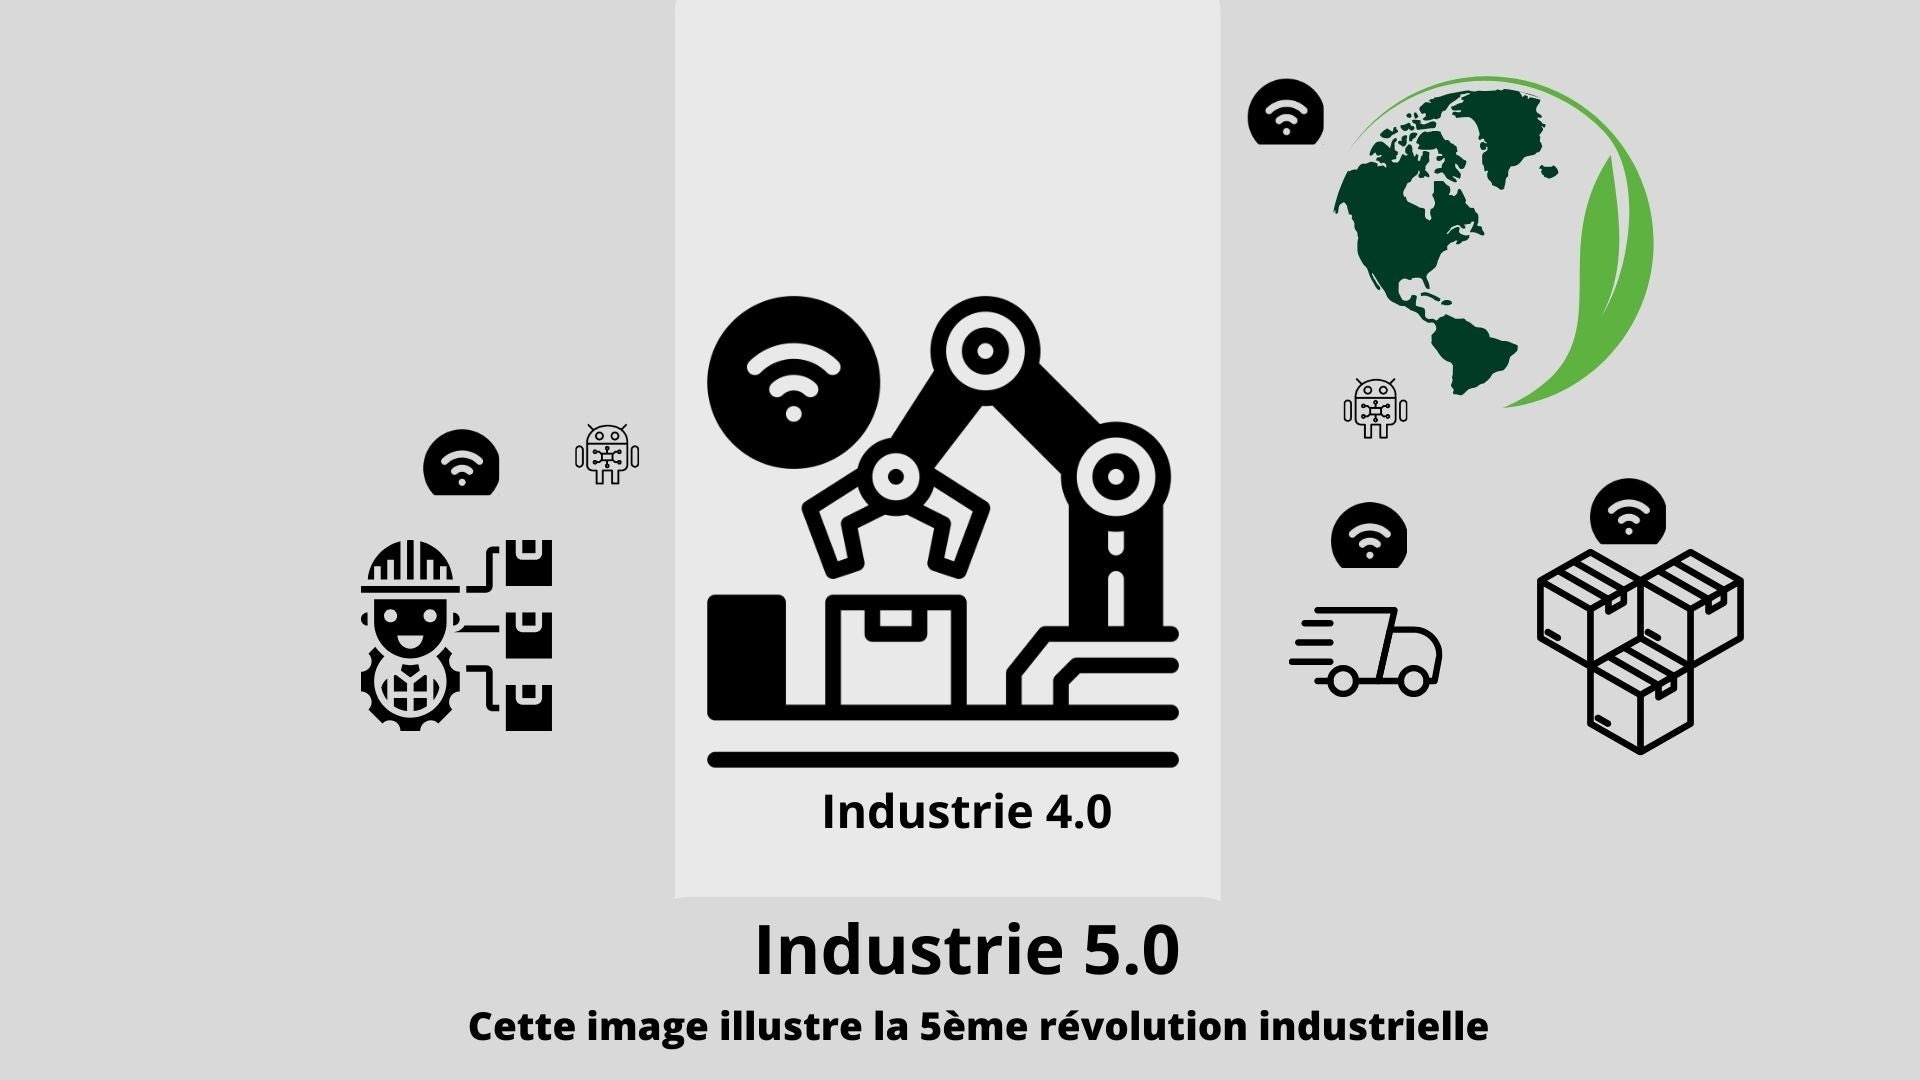 Illustration of industry 5.0